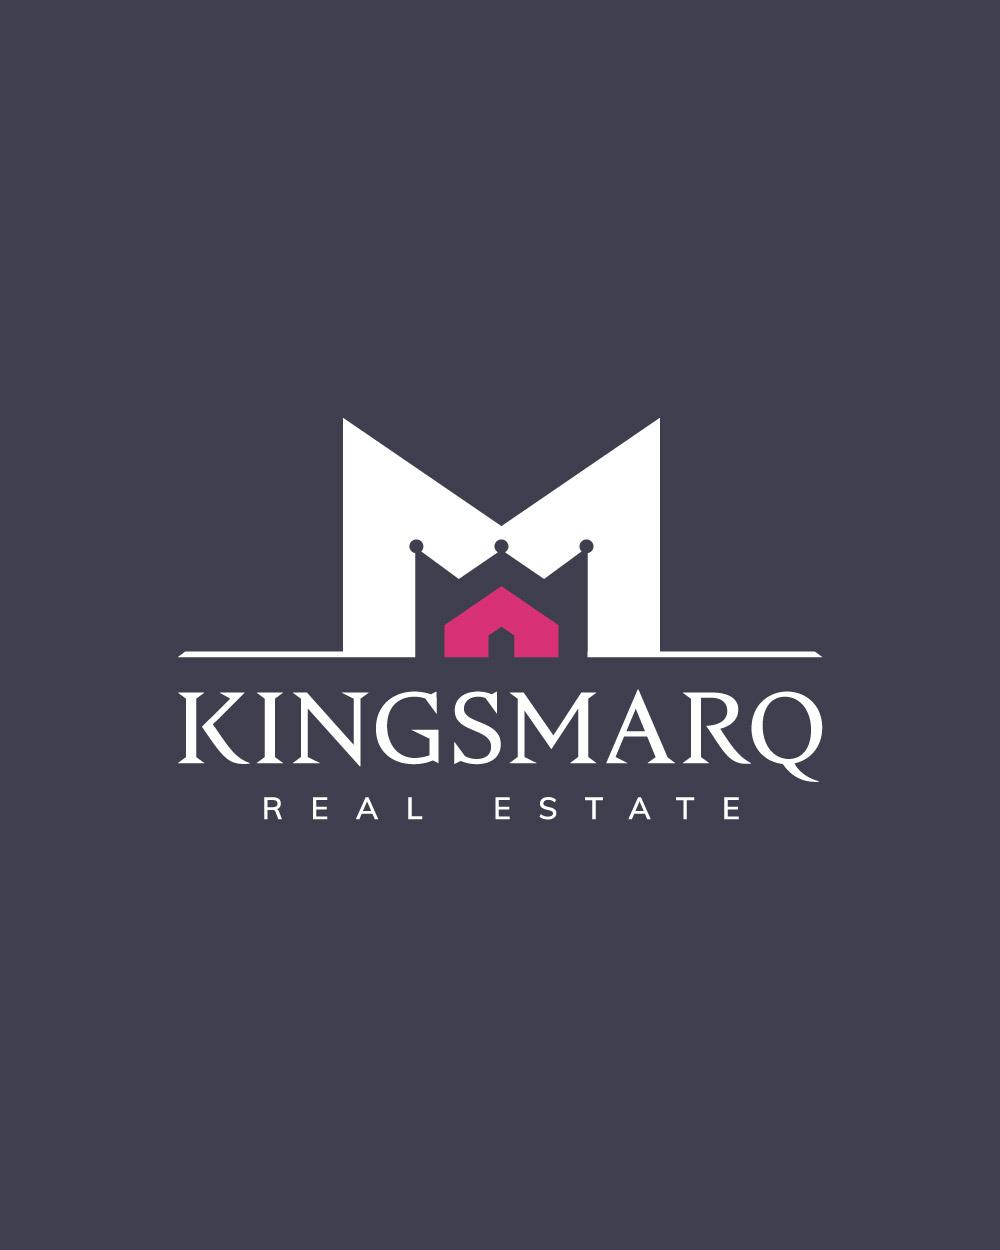 Kingsmarq Real Estate